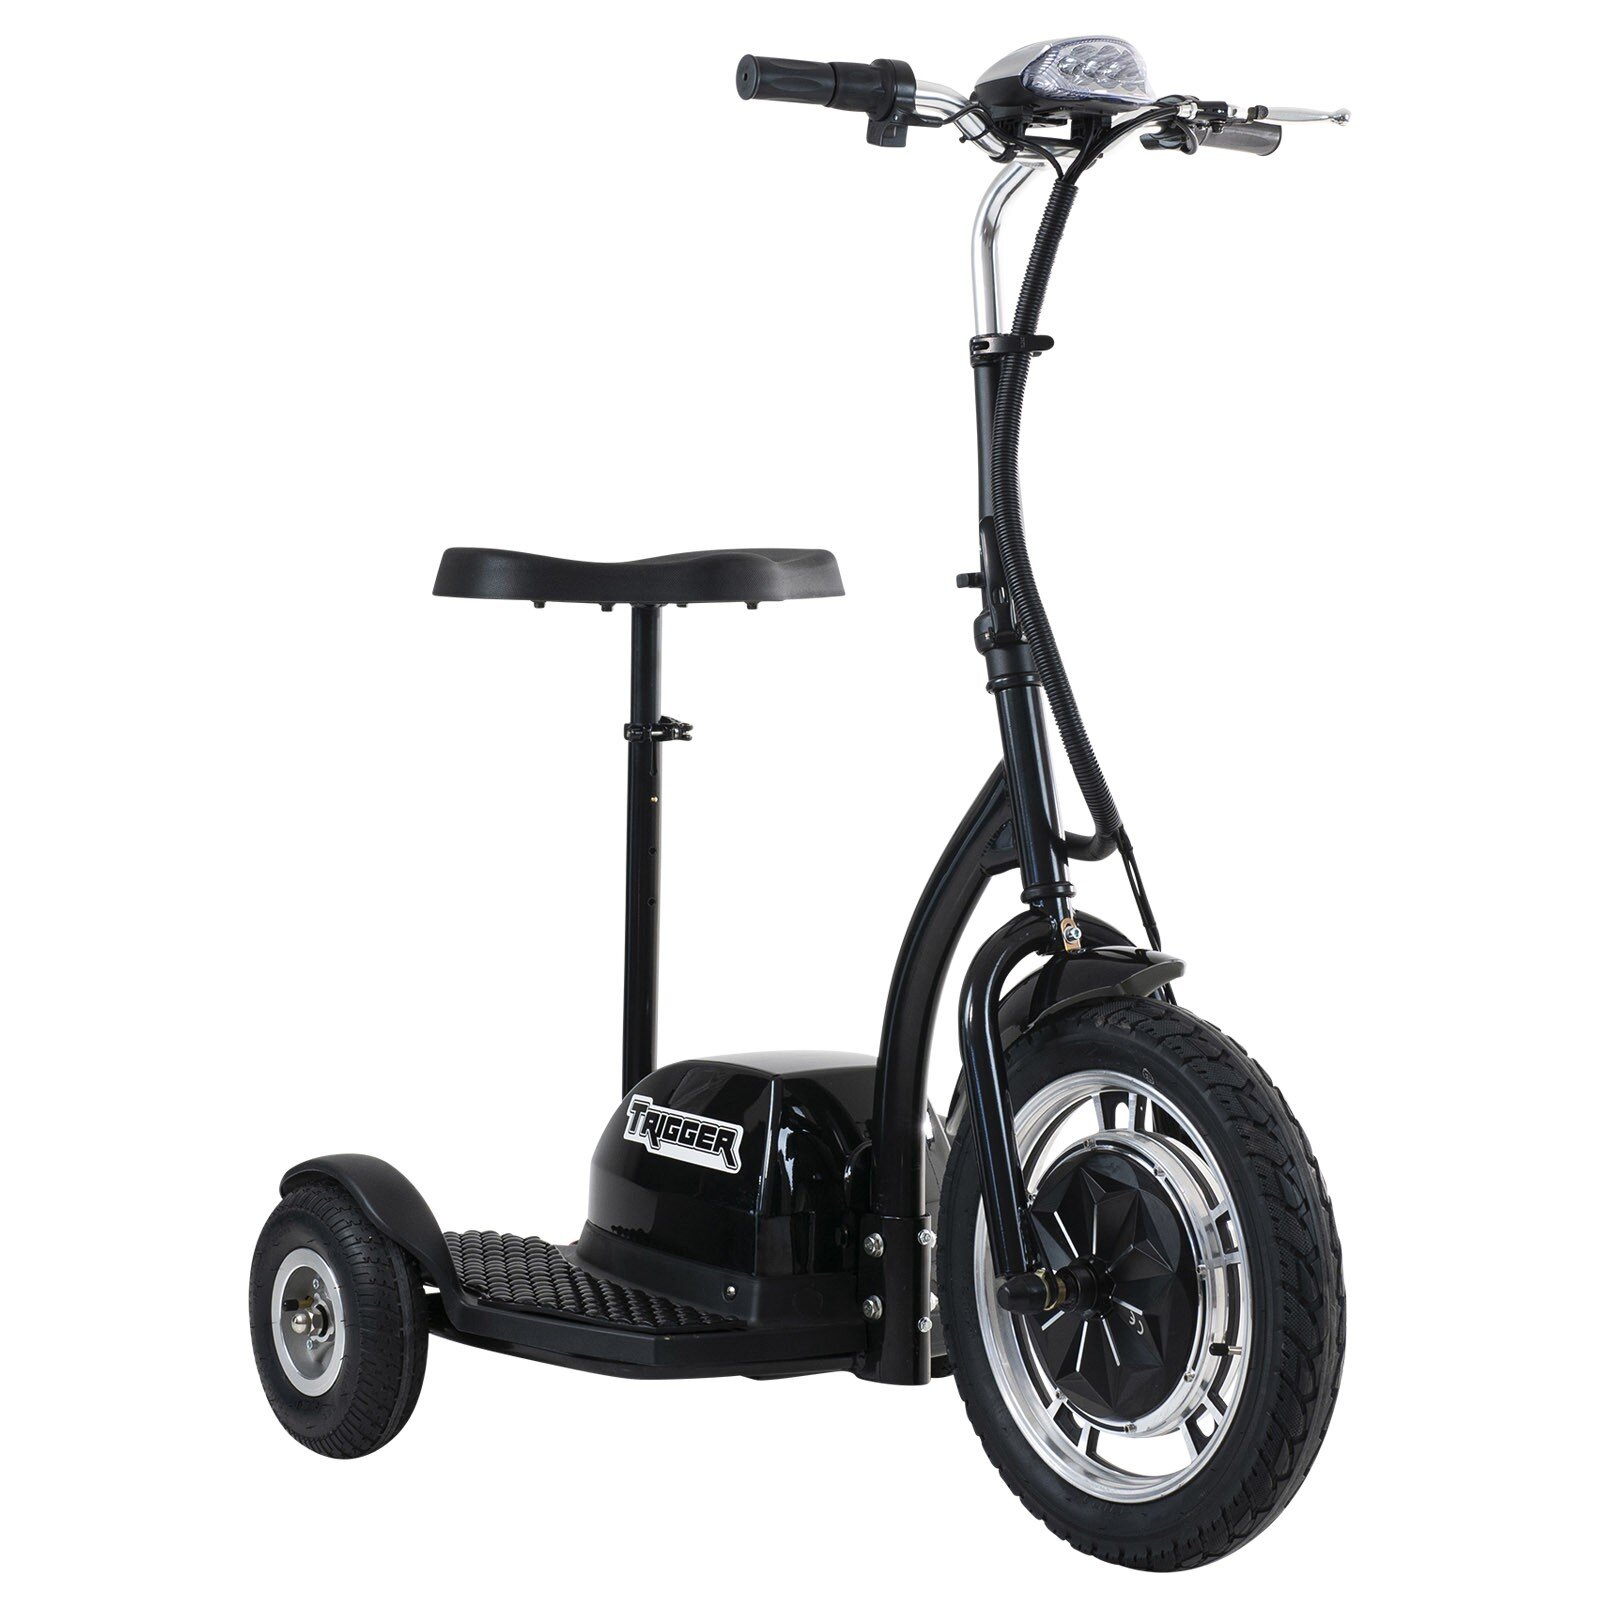 FYNDEX - Trehjulig  scooter Trigger, 500W - Svart